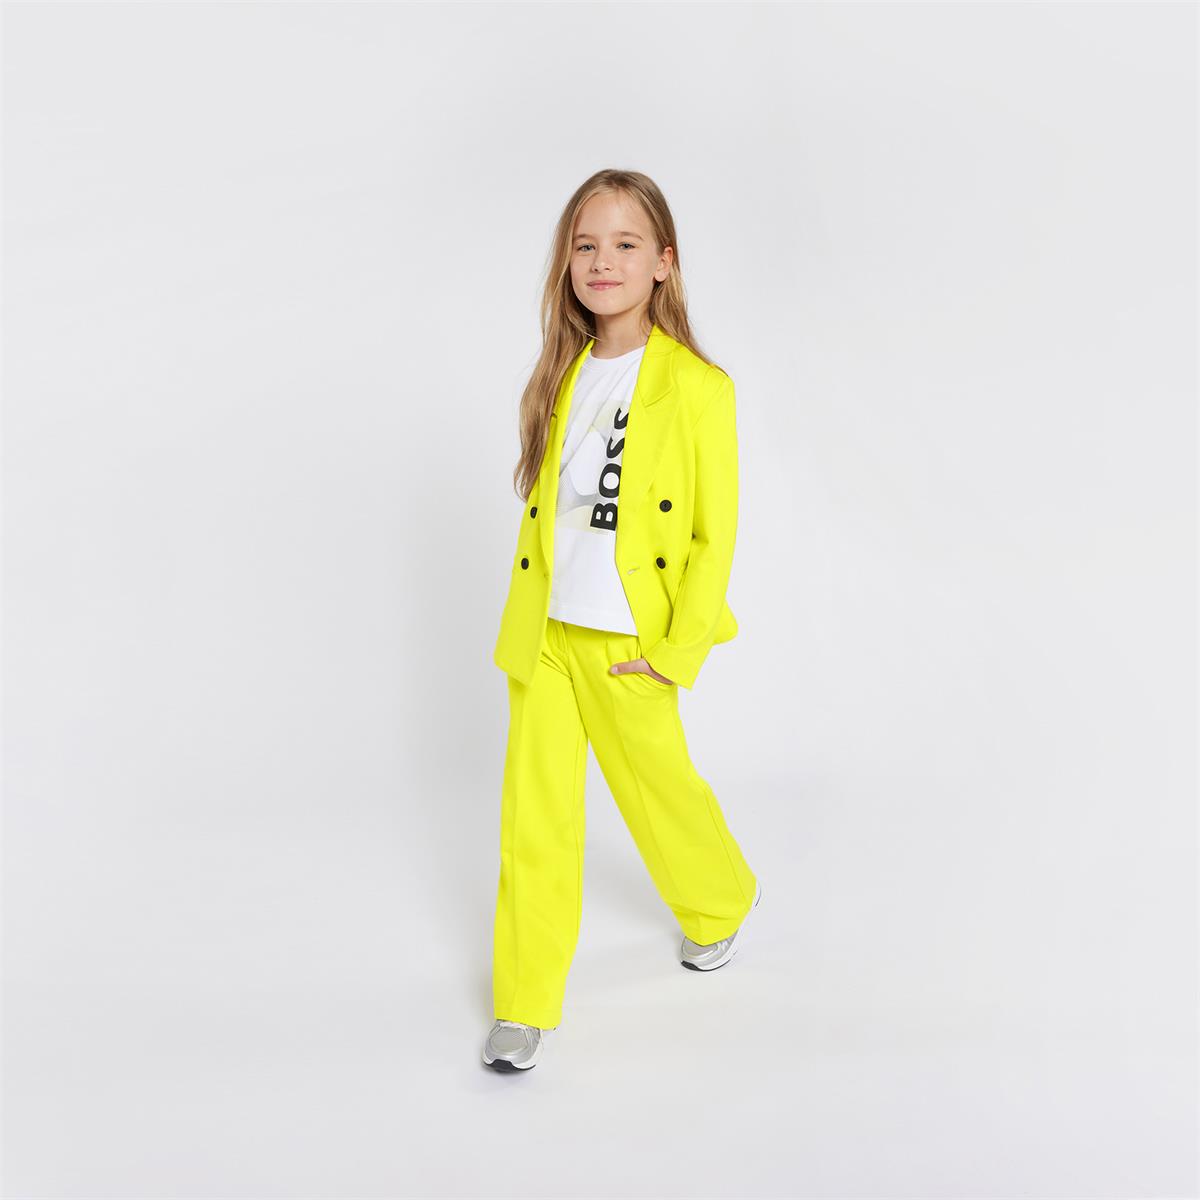 Girls Yellow Suit